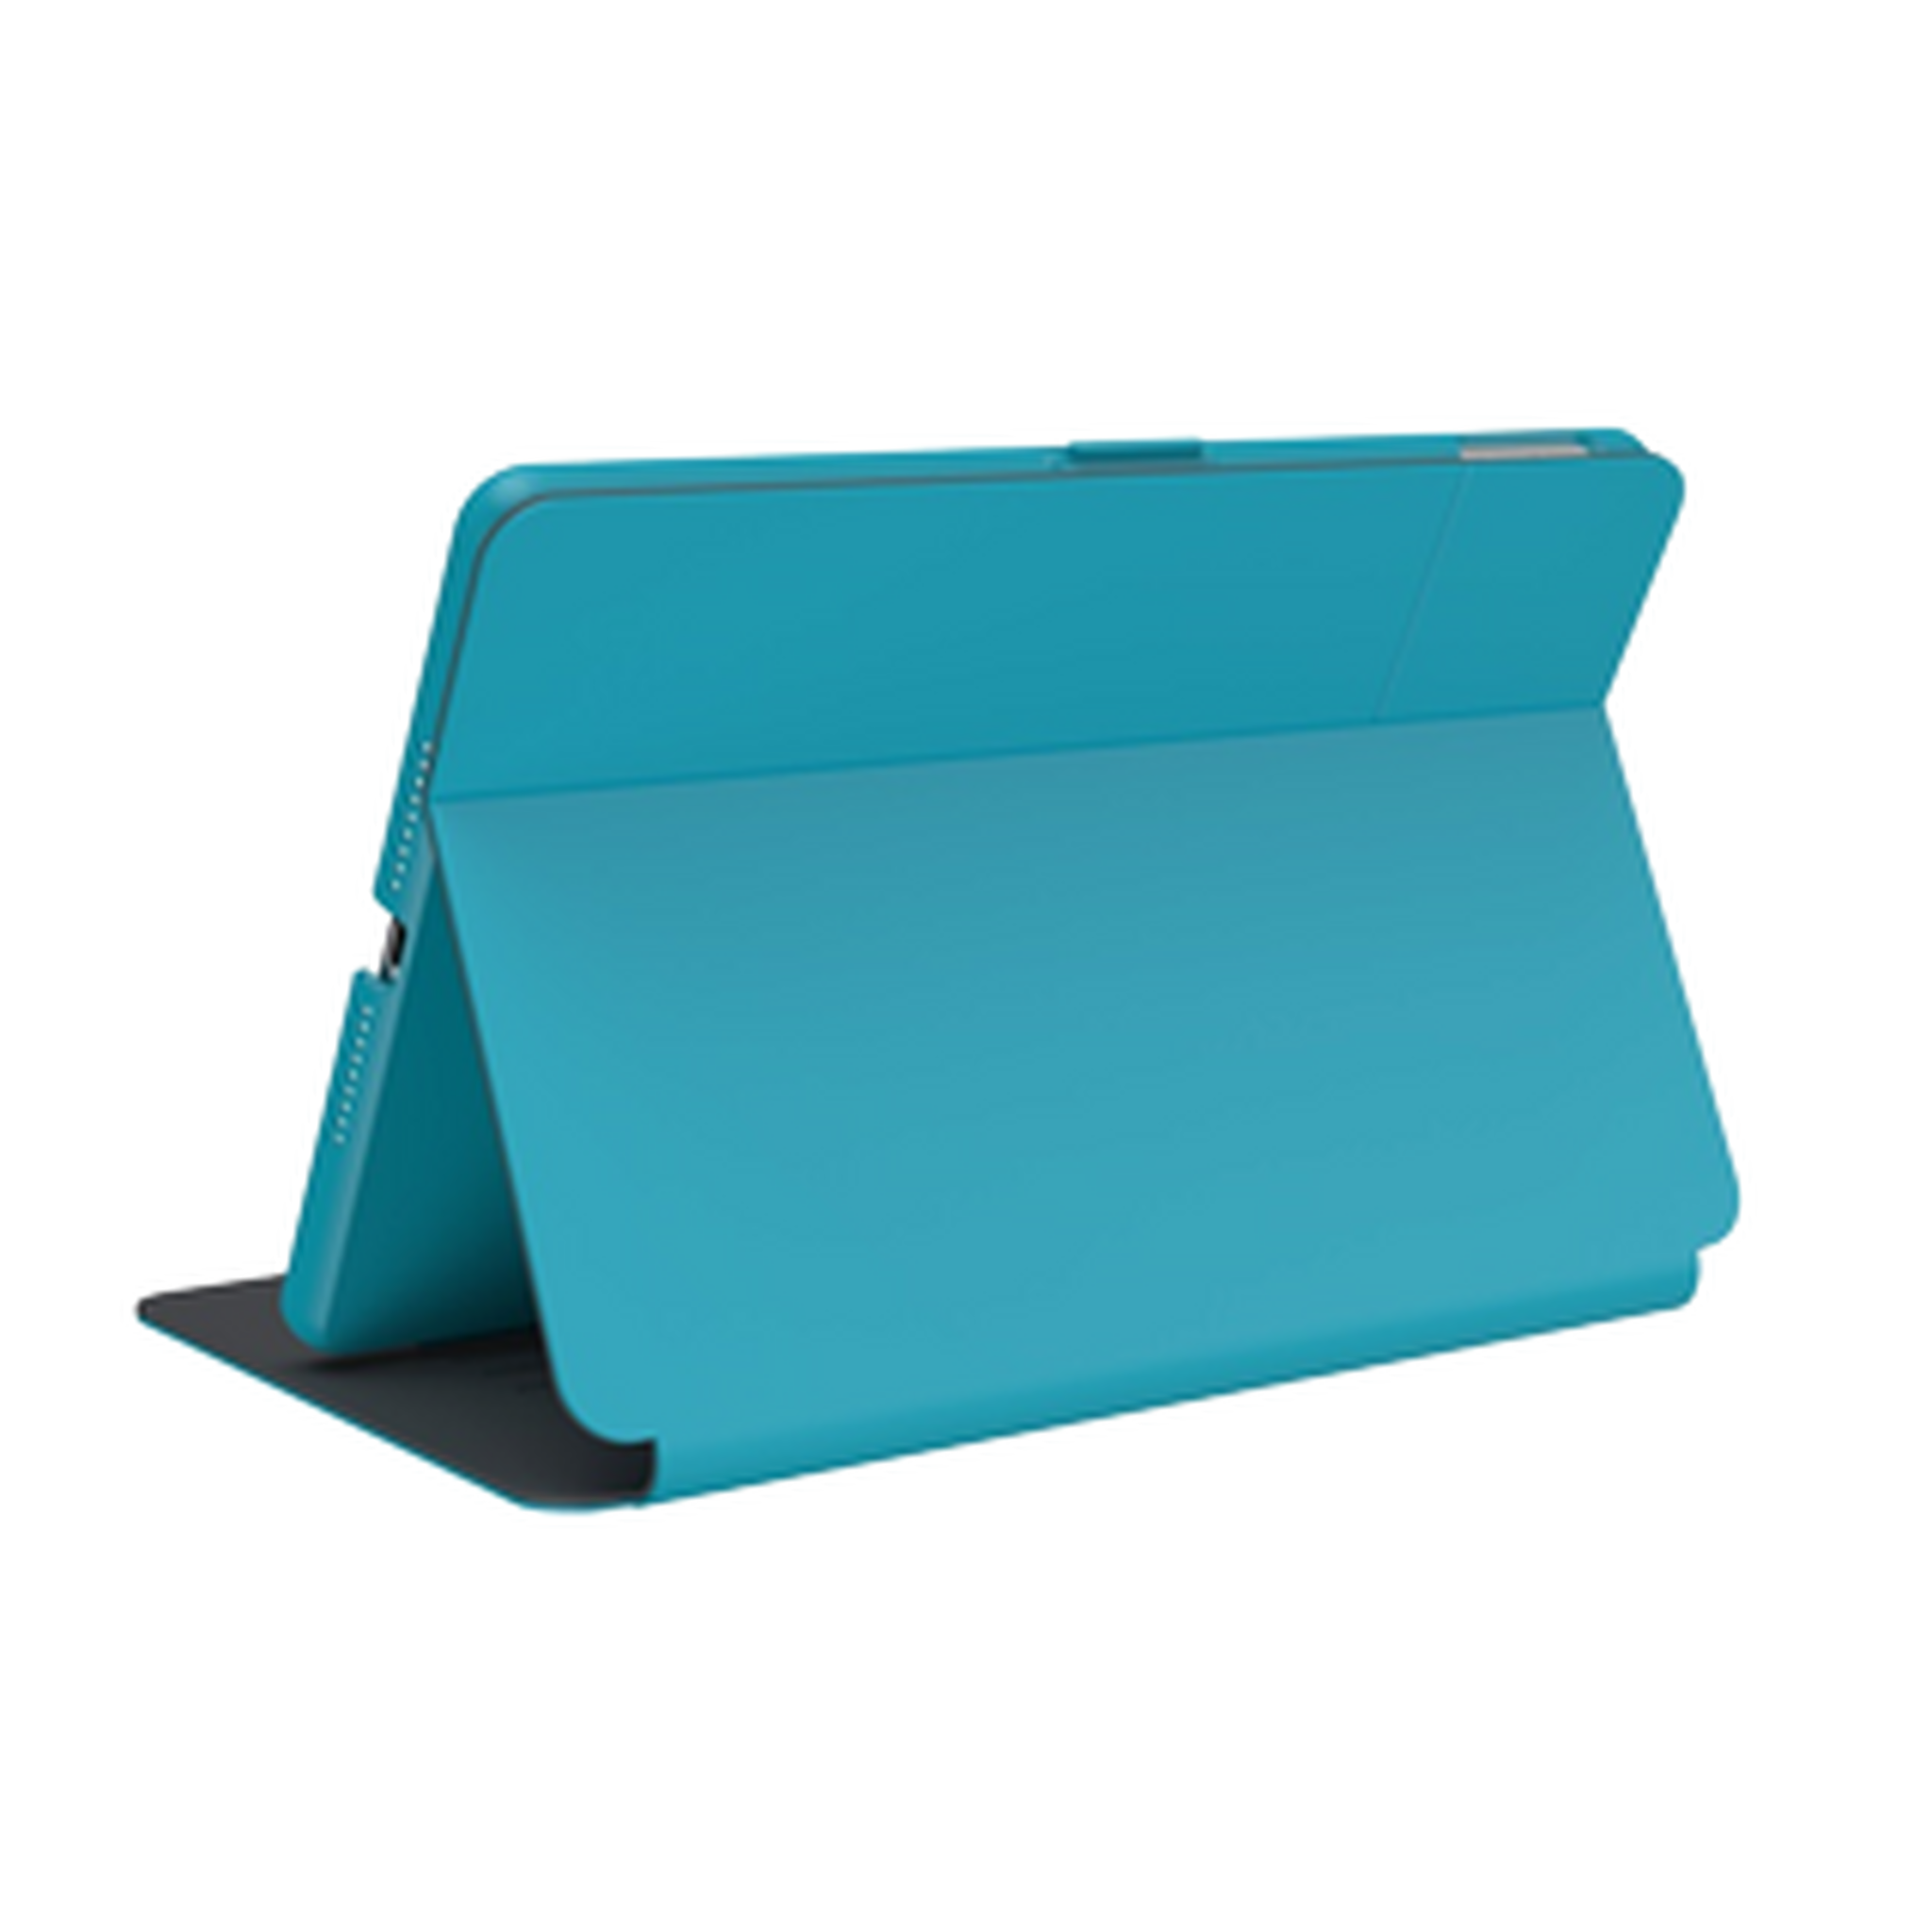 Speck Balance Folio 10.2-inch iPad Case - Blue